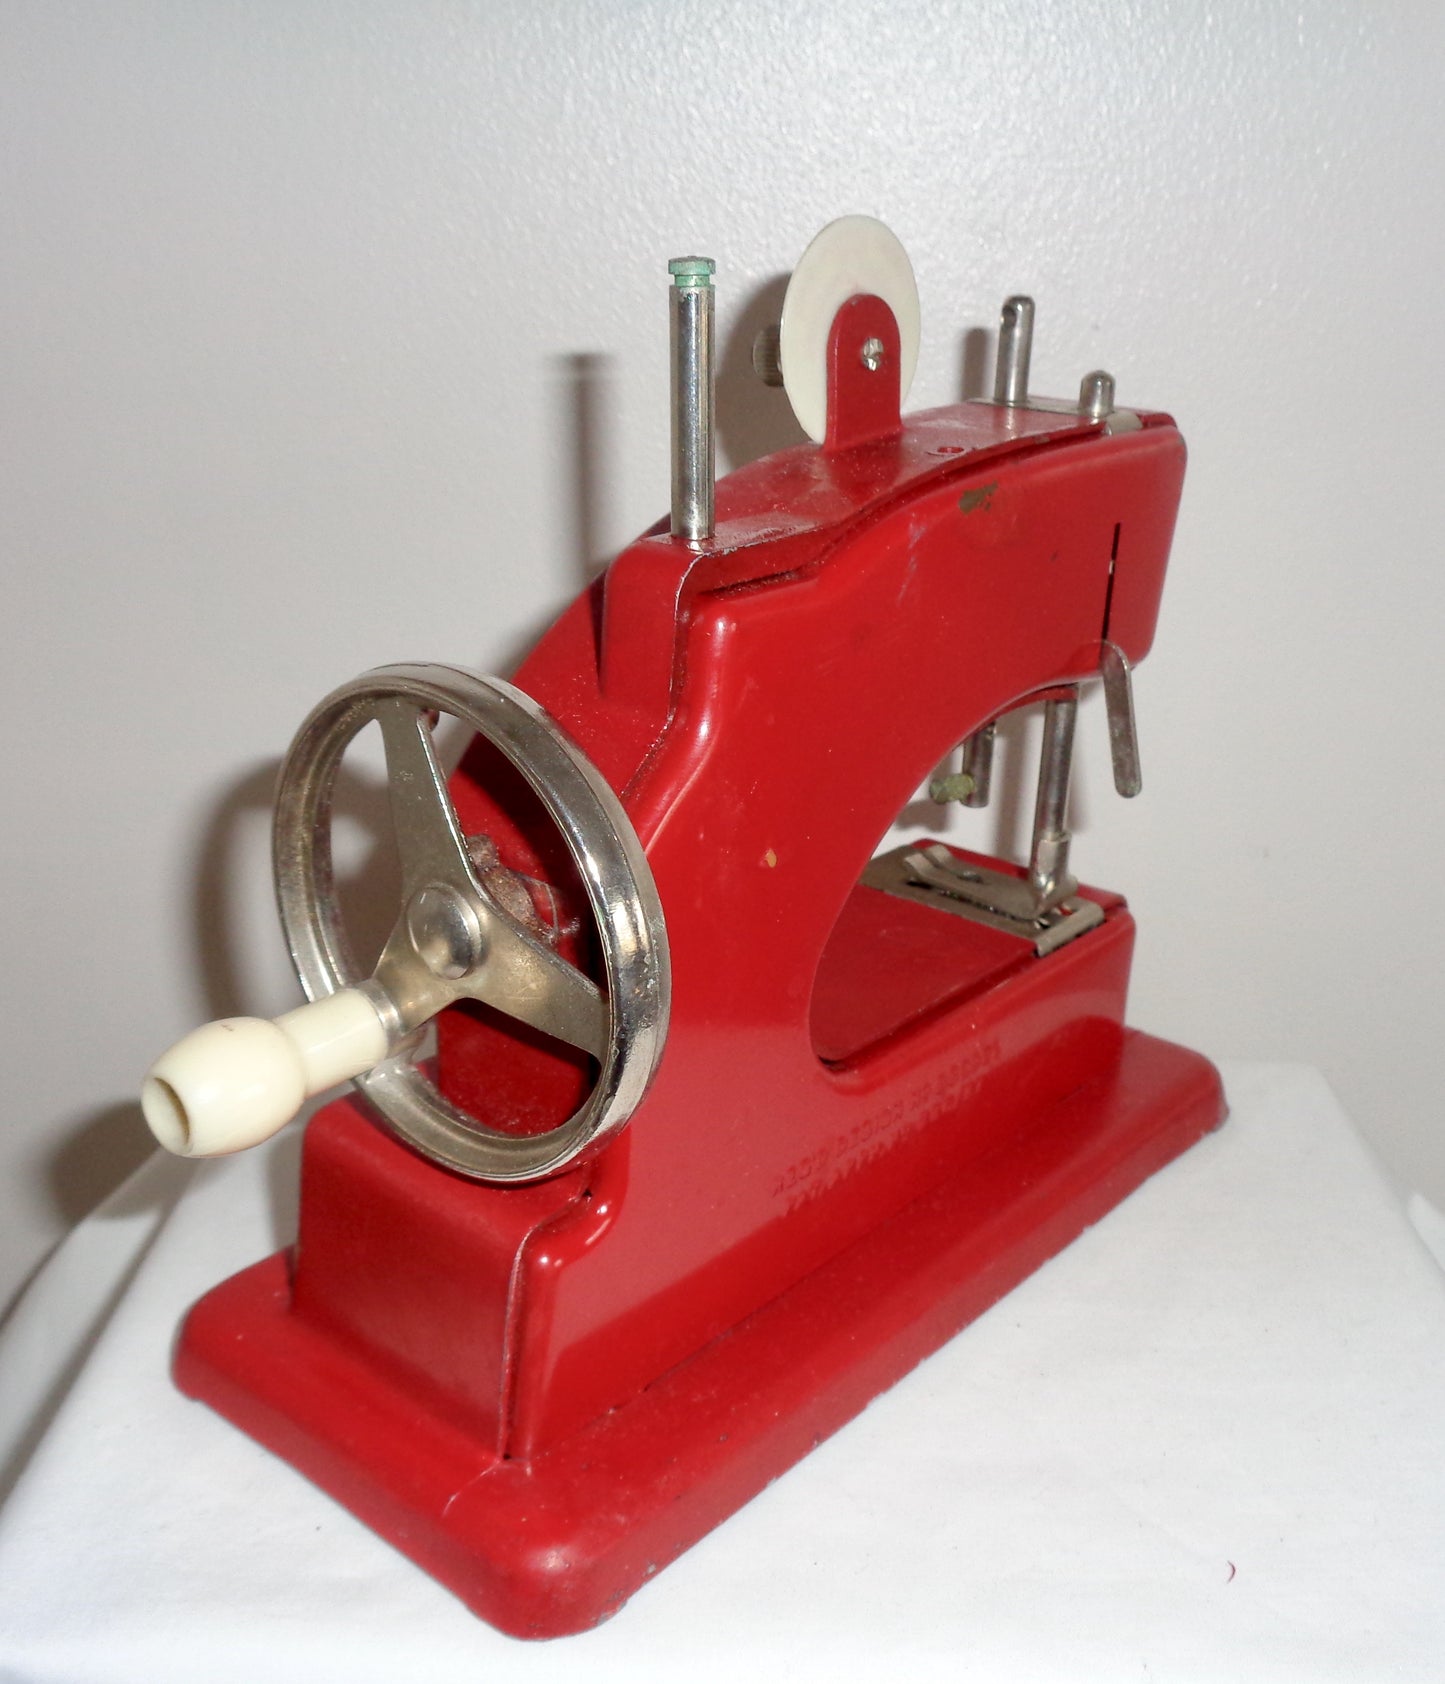 Vintage Vulcan Minor Miniature / Child's Sewing Machine In Its Original Box